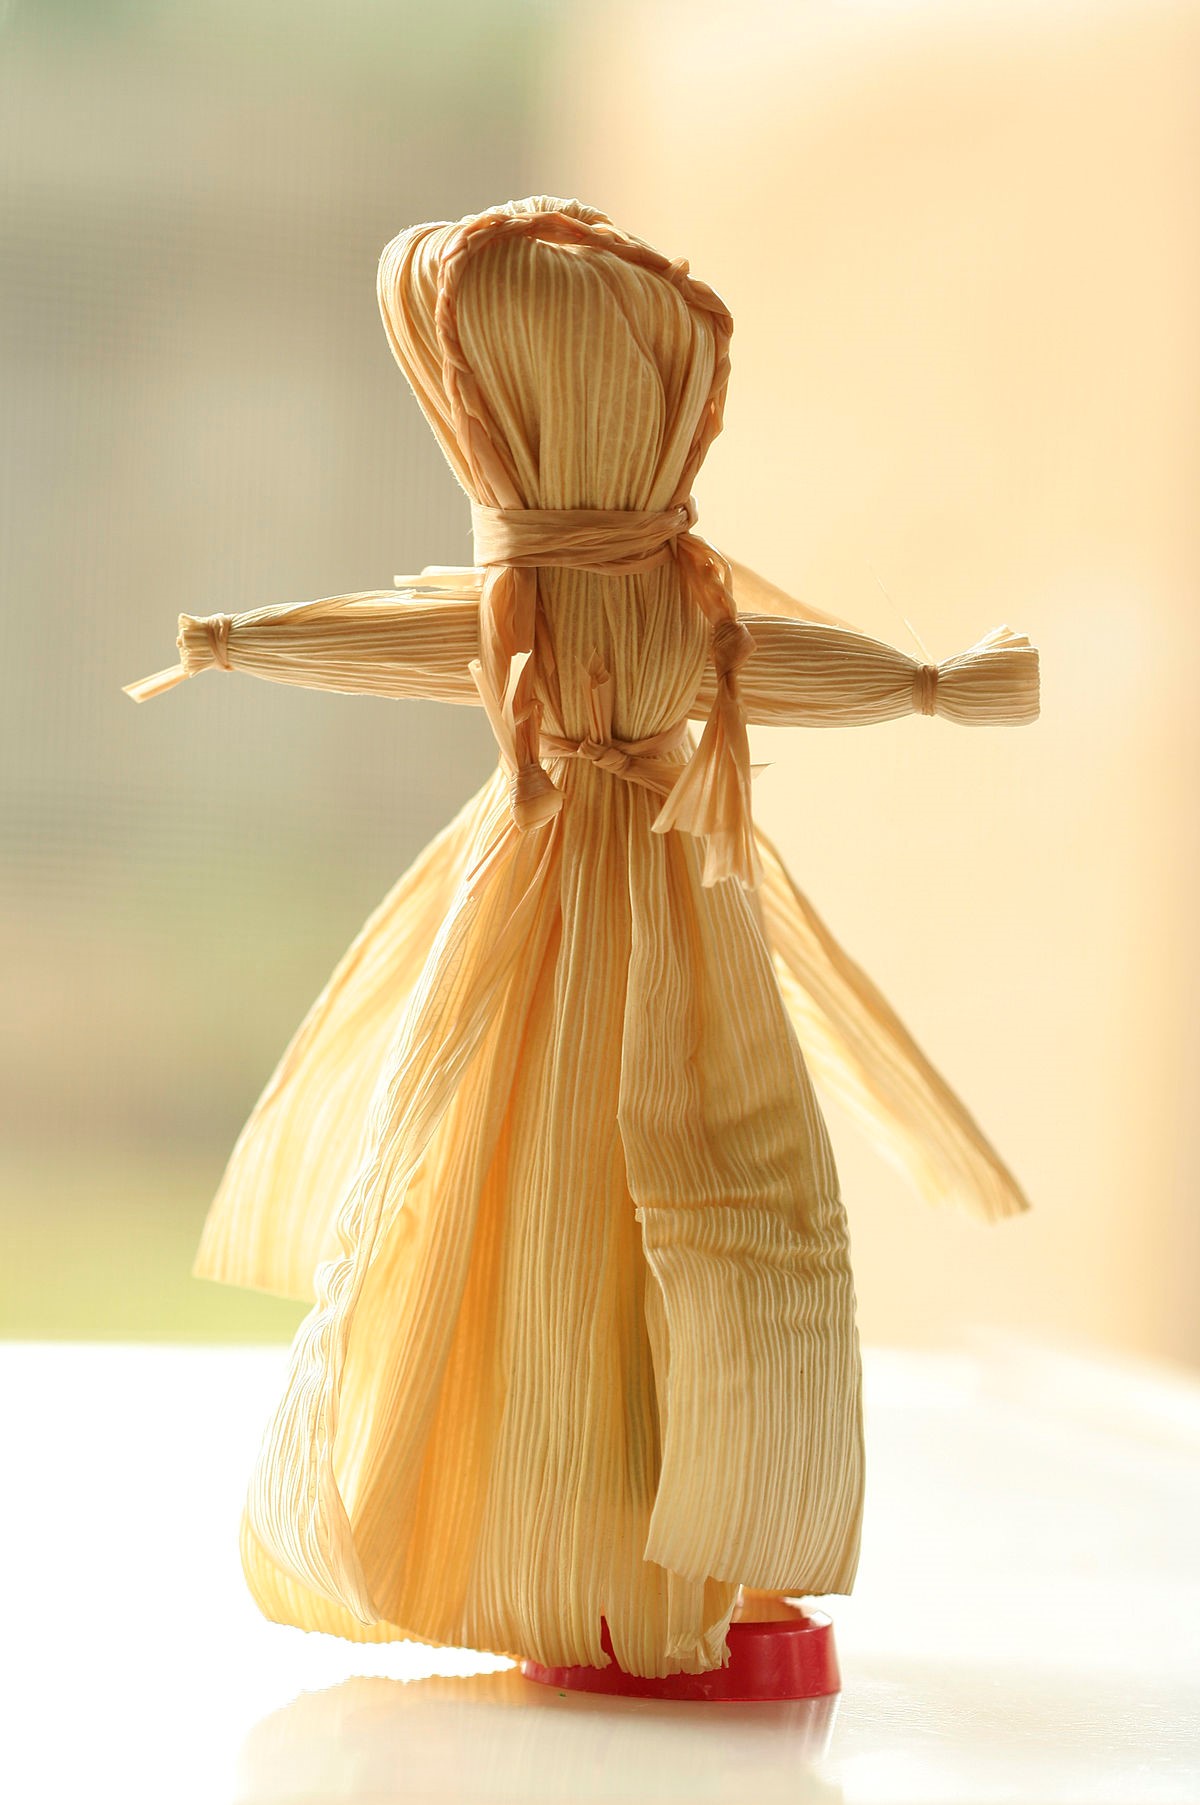 A corn dolly